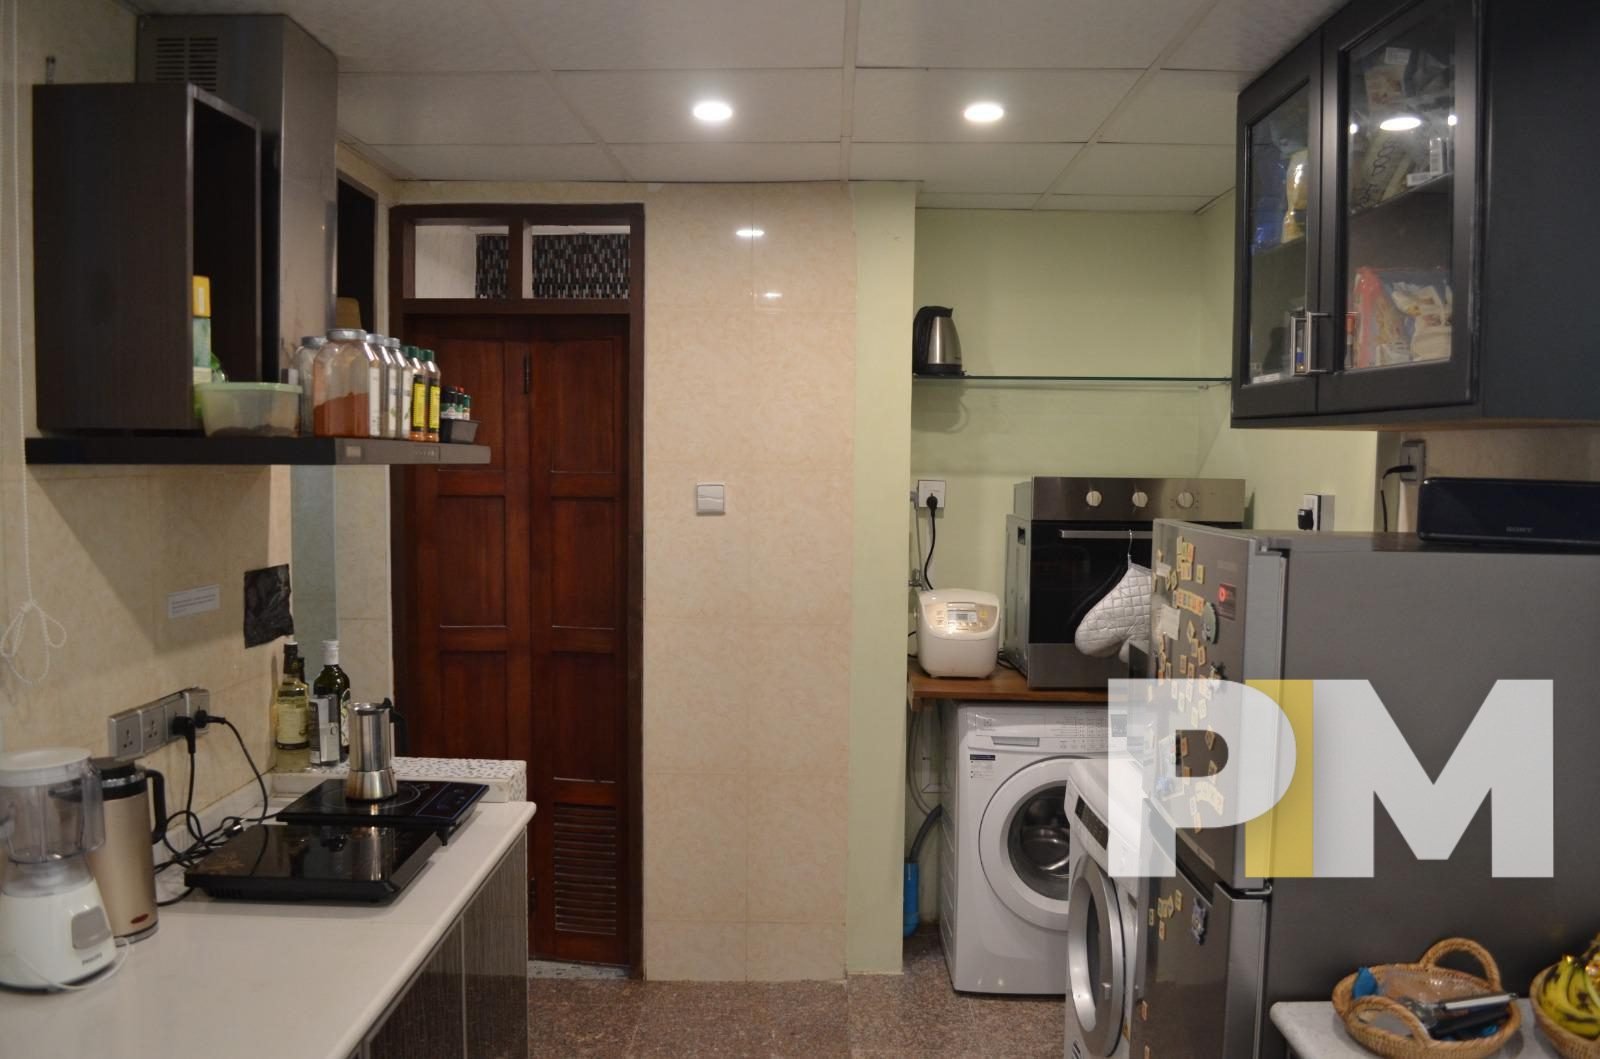 kitchen with washing machine - properties in Yangon